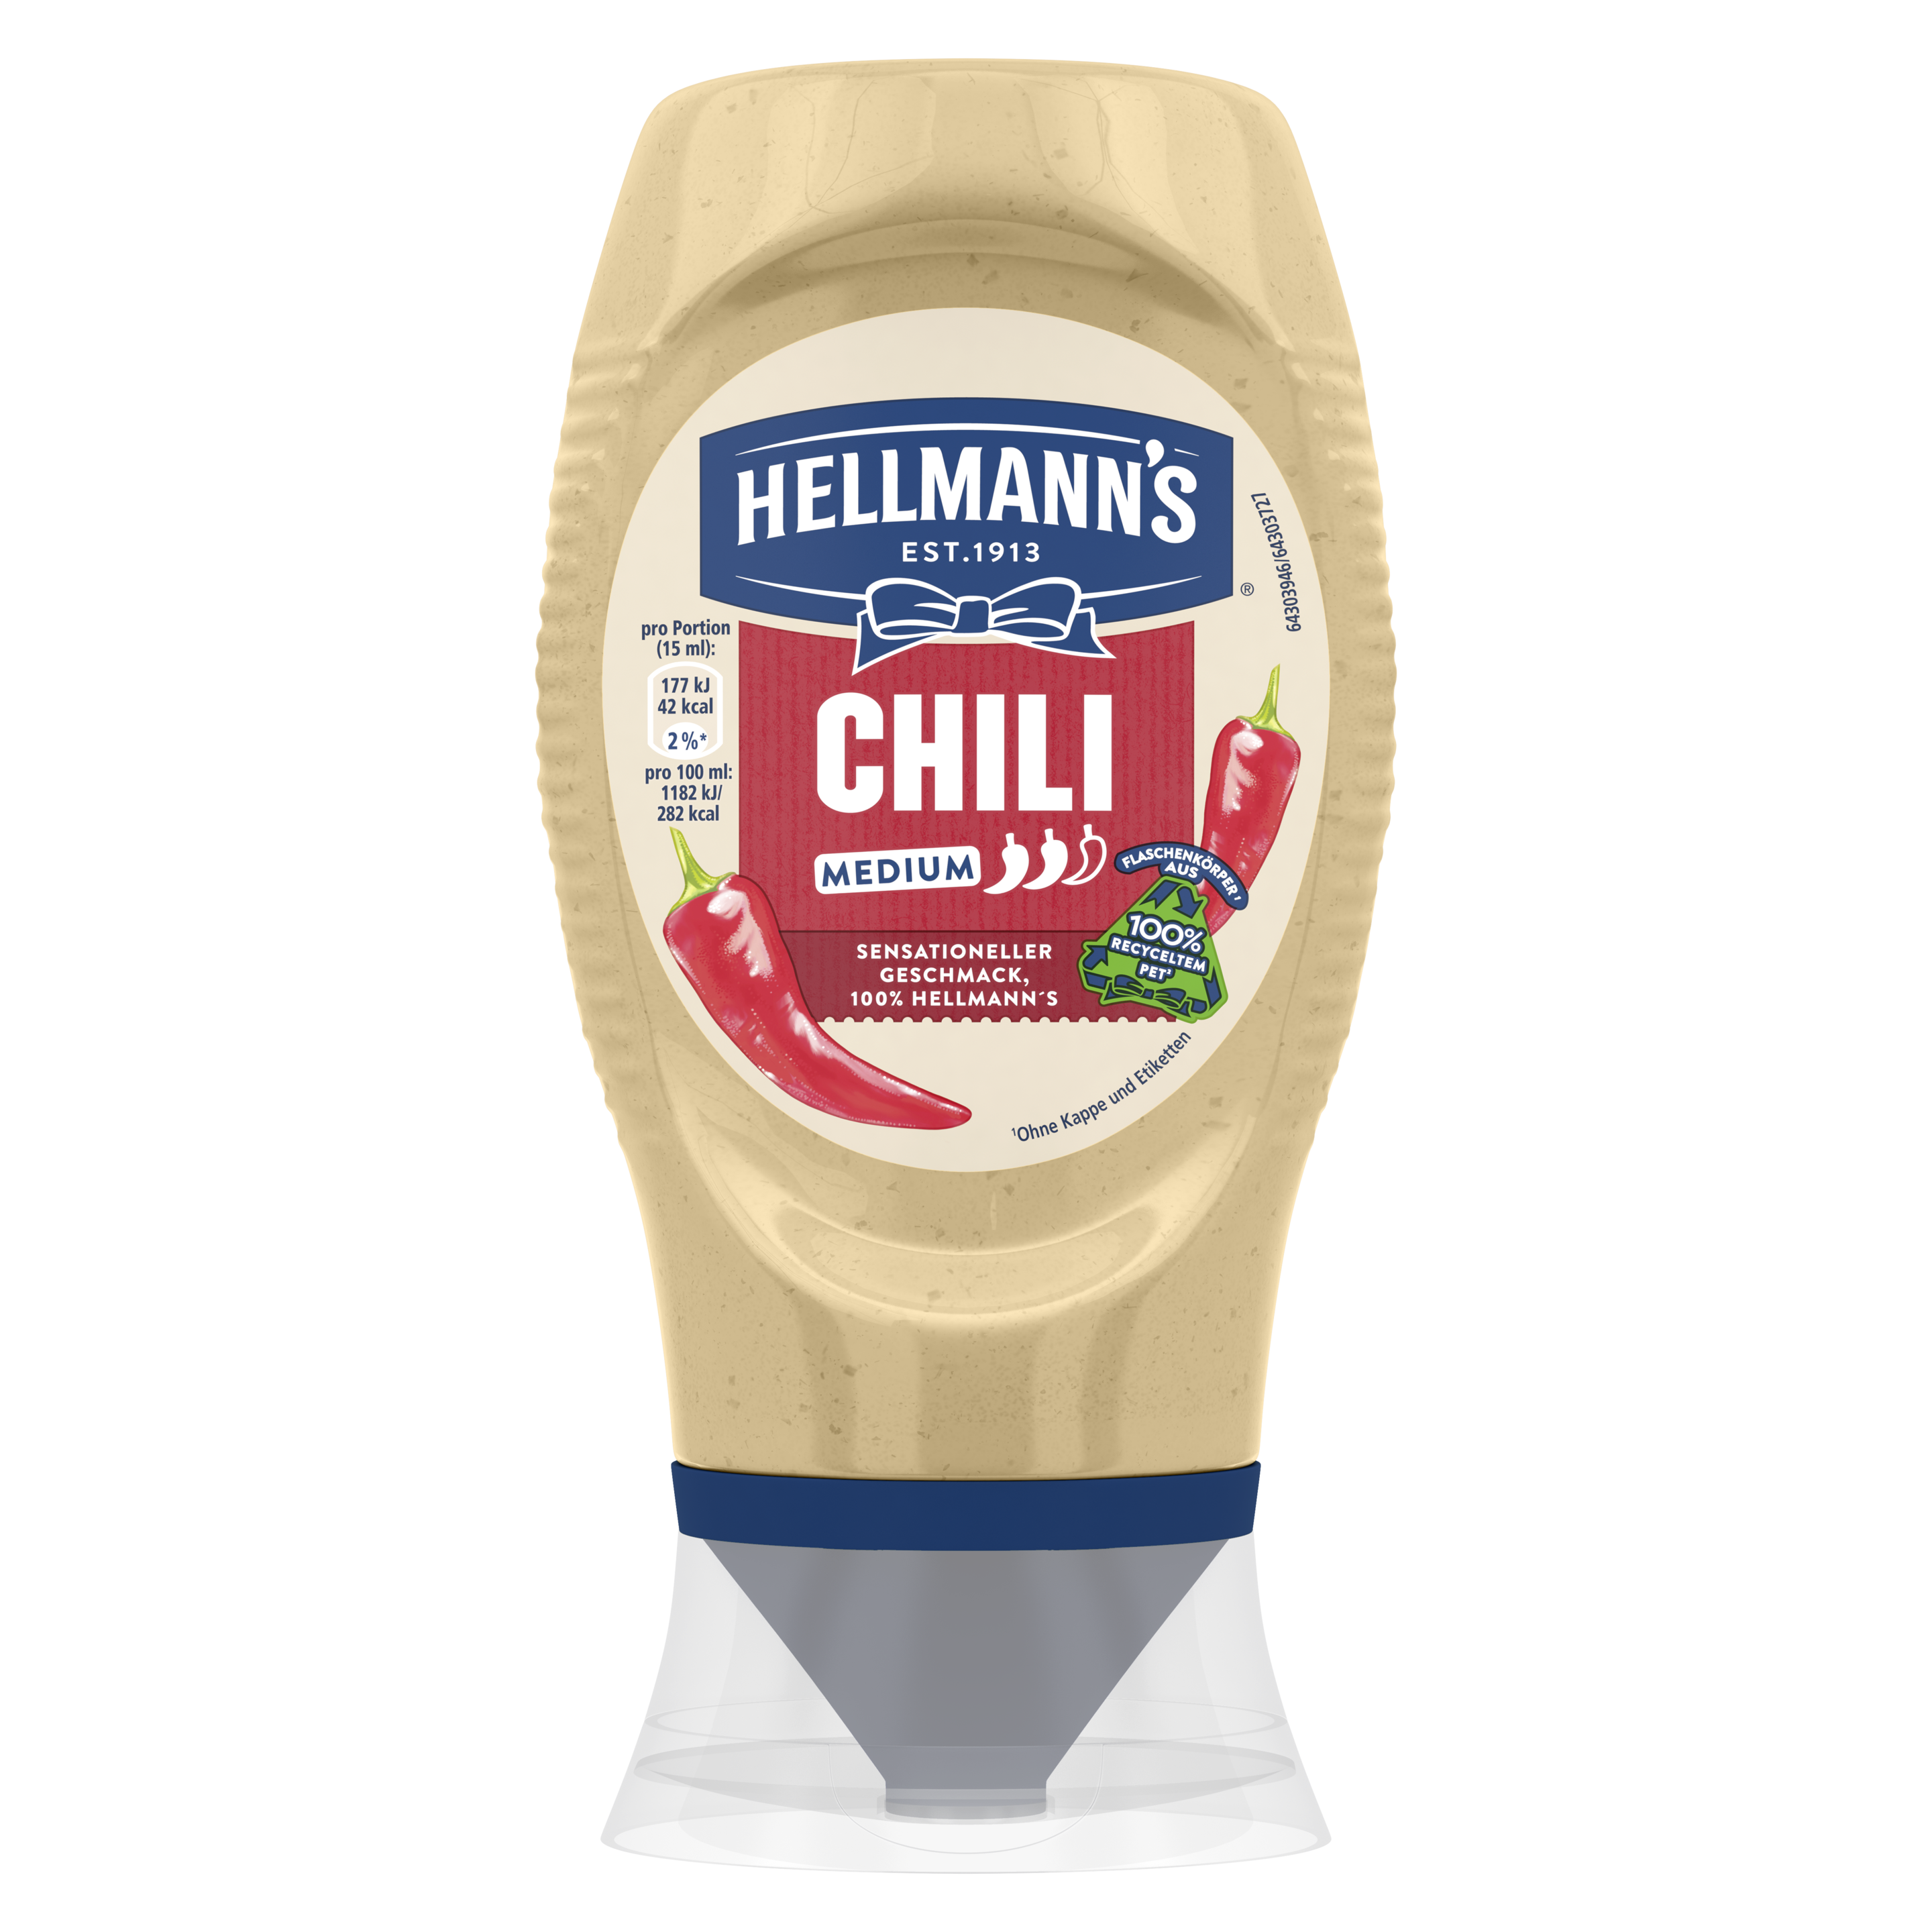 Hellmann's Chili